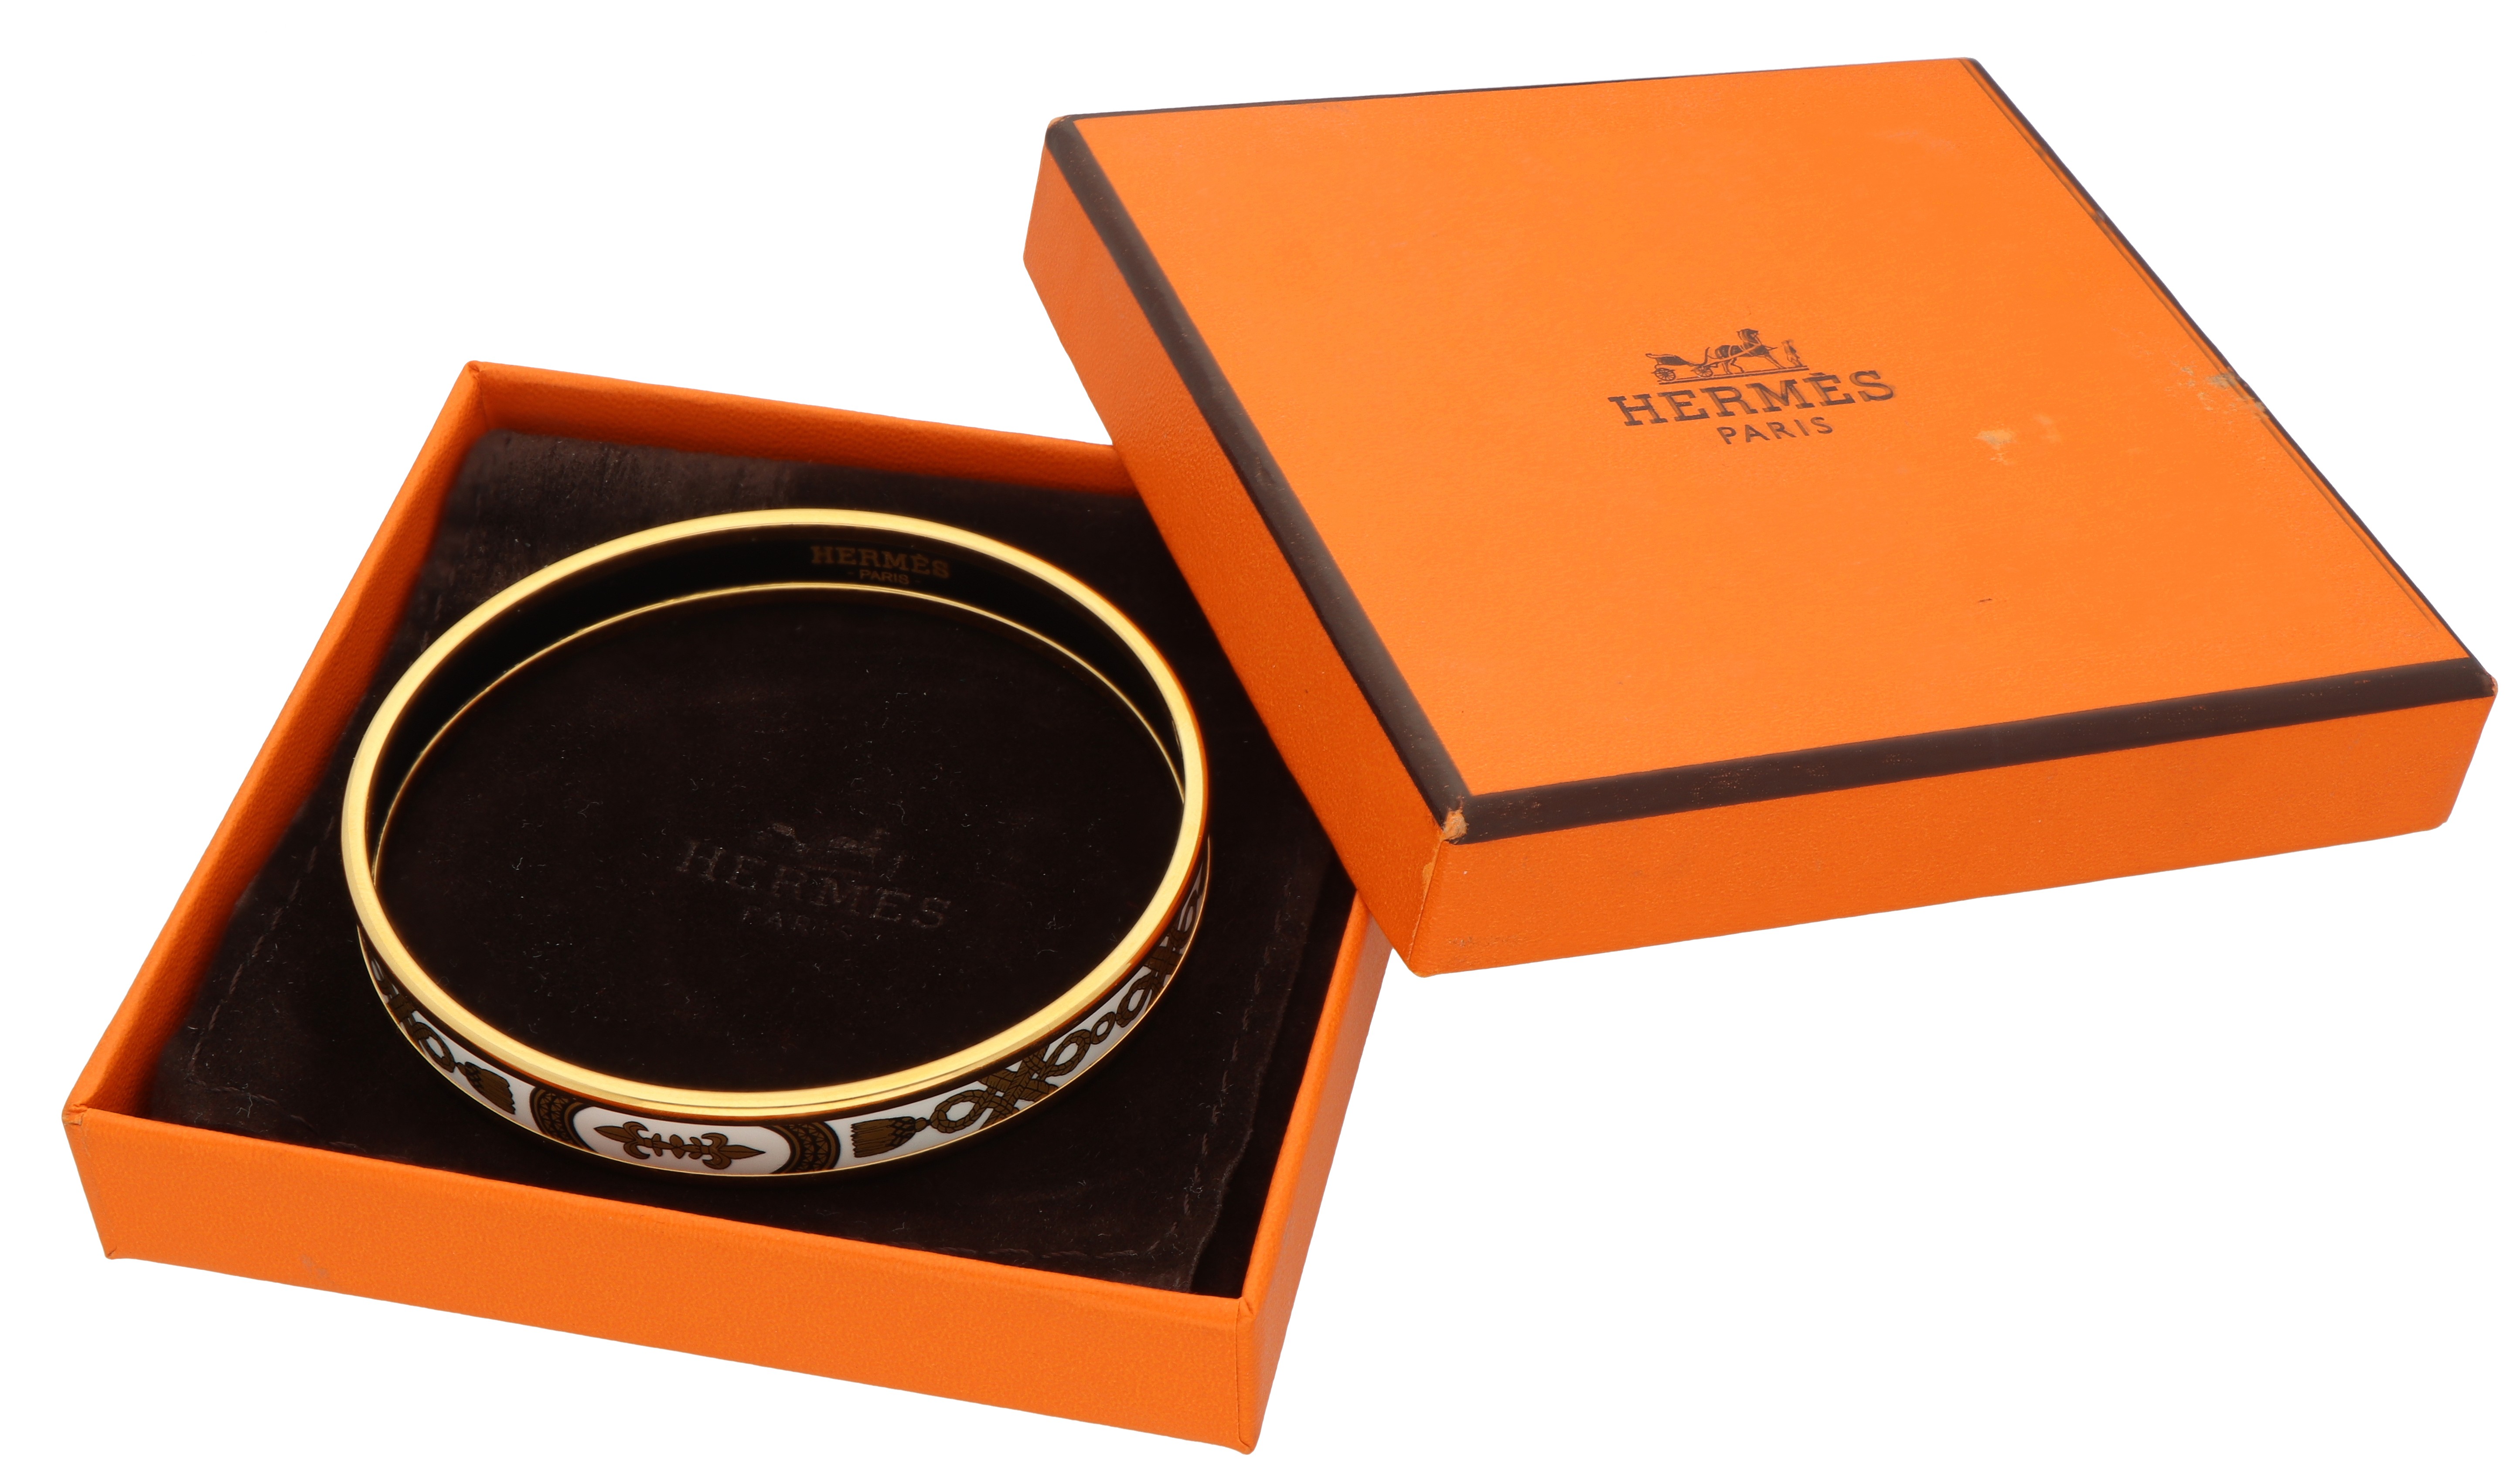 No Reserve - Hermès steel bangle bracelet with white enamel. - Image 3 of 6